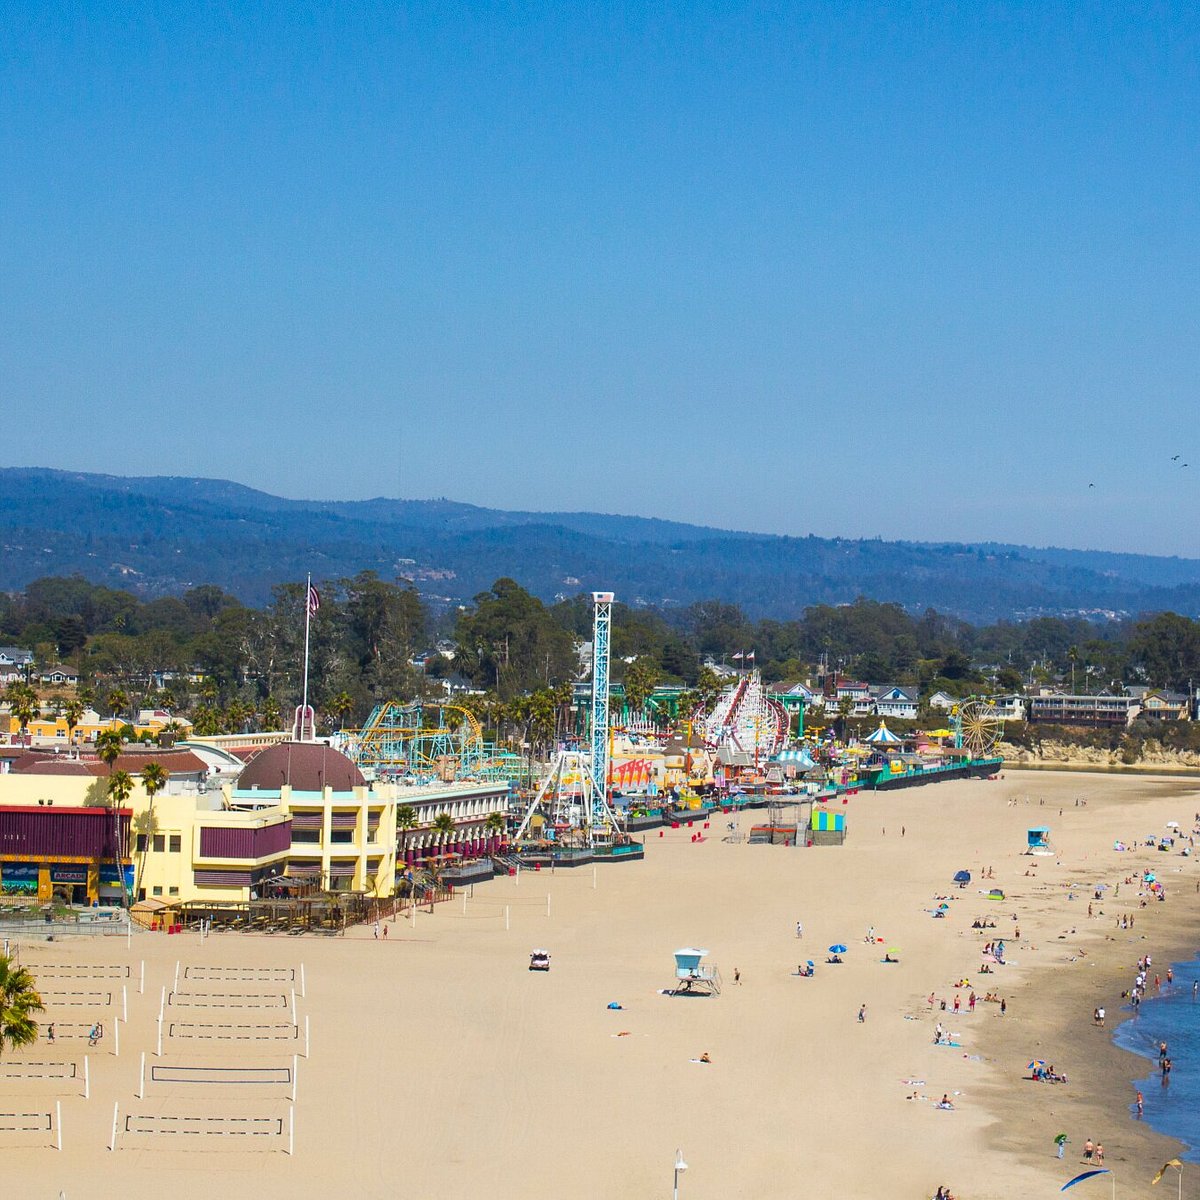 Santa Cruz, California: Beaches, Boardwalk, Whales and Wineries